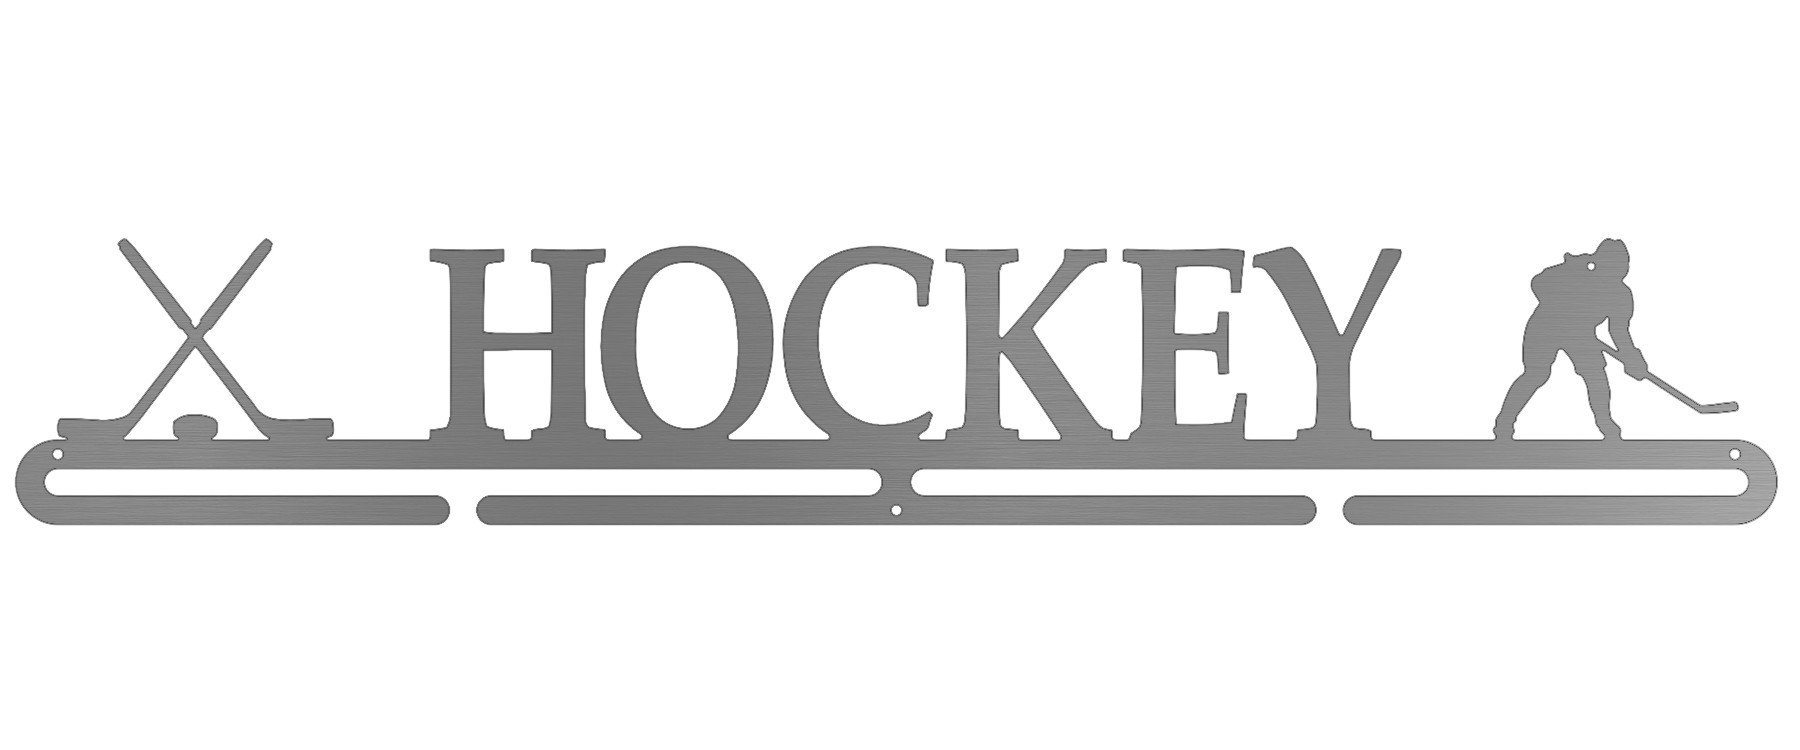 Hockey - Female